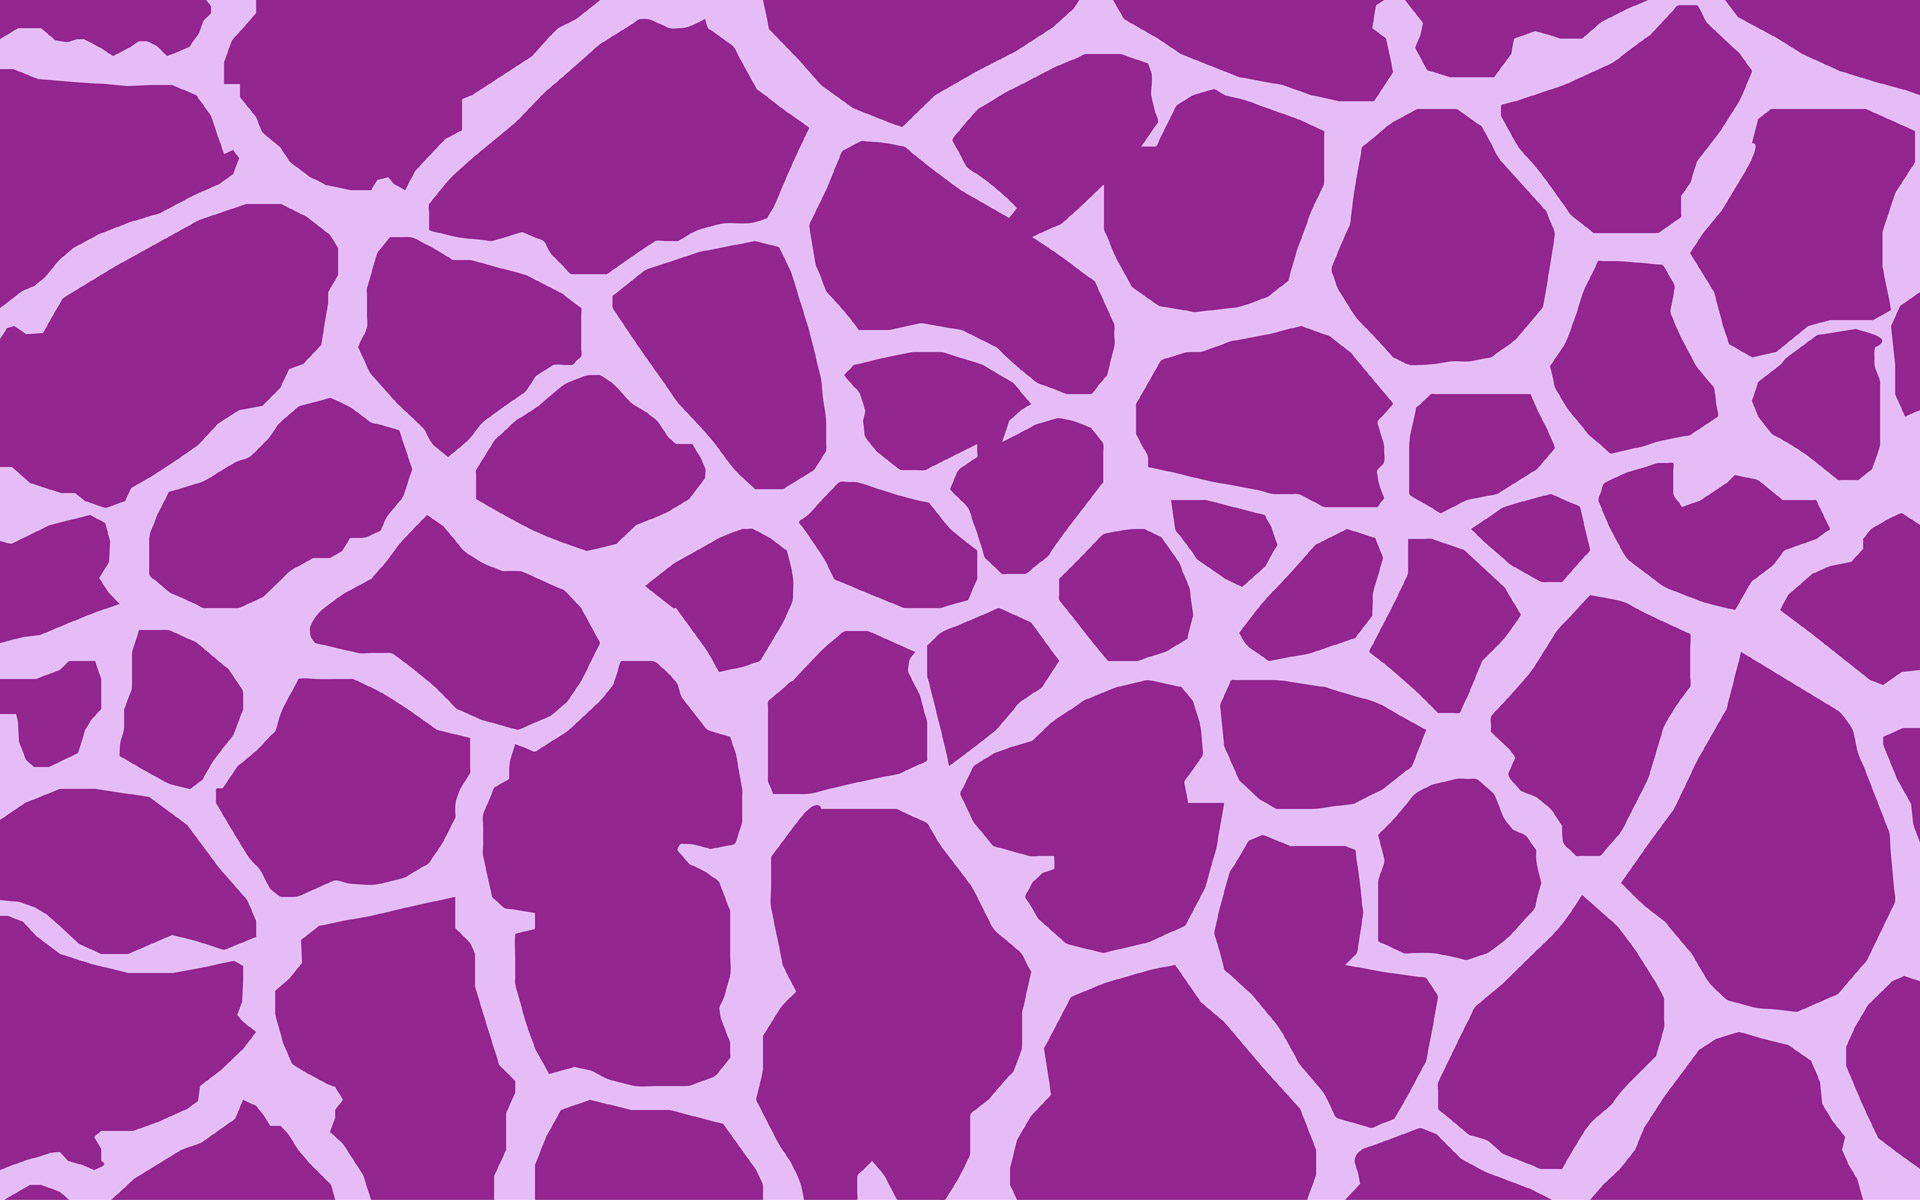 Giraffe skin pattern background in purple and lavender